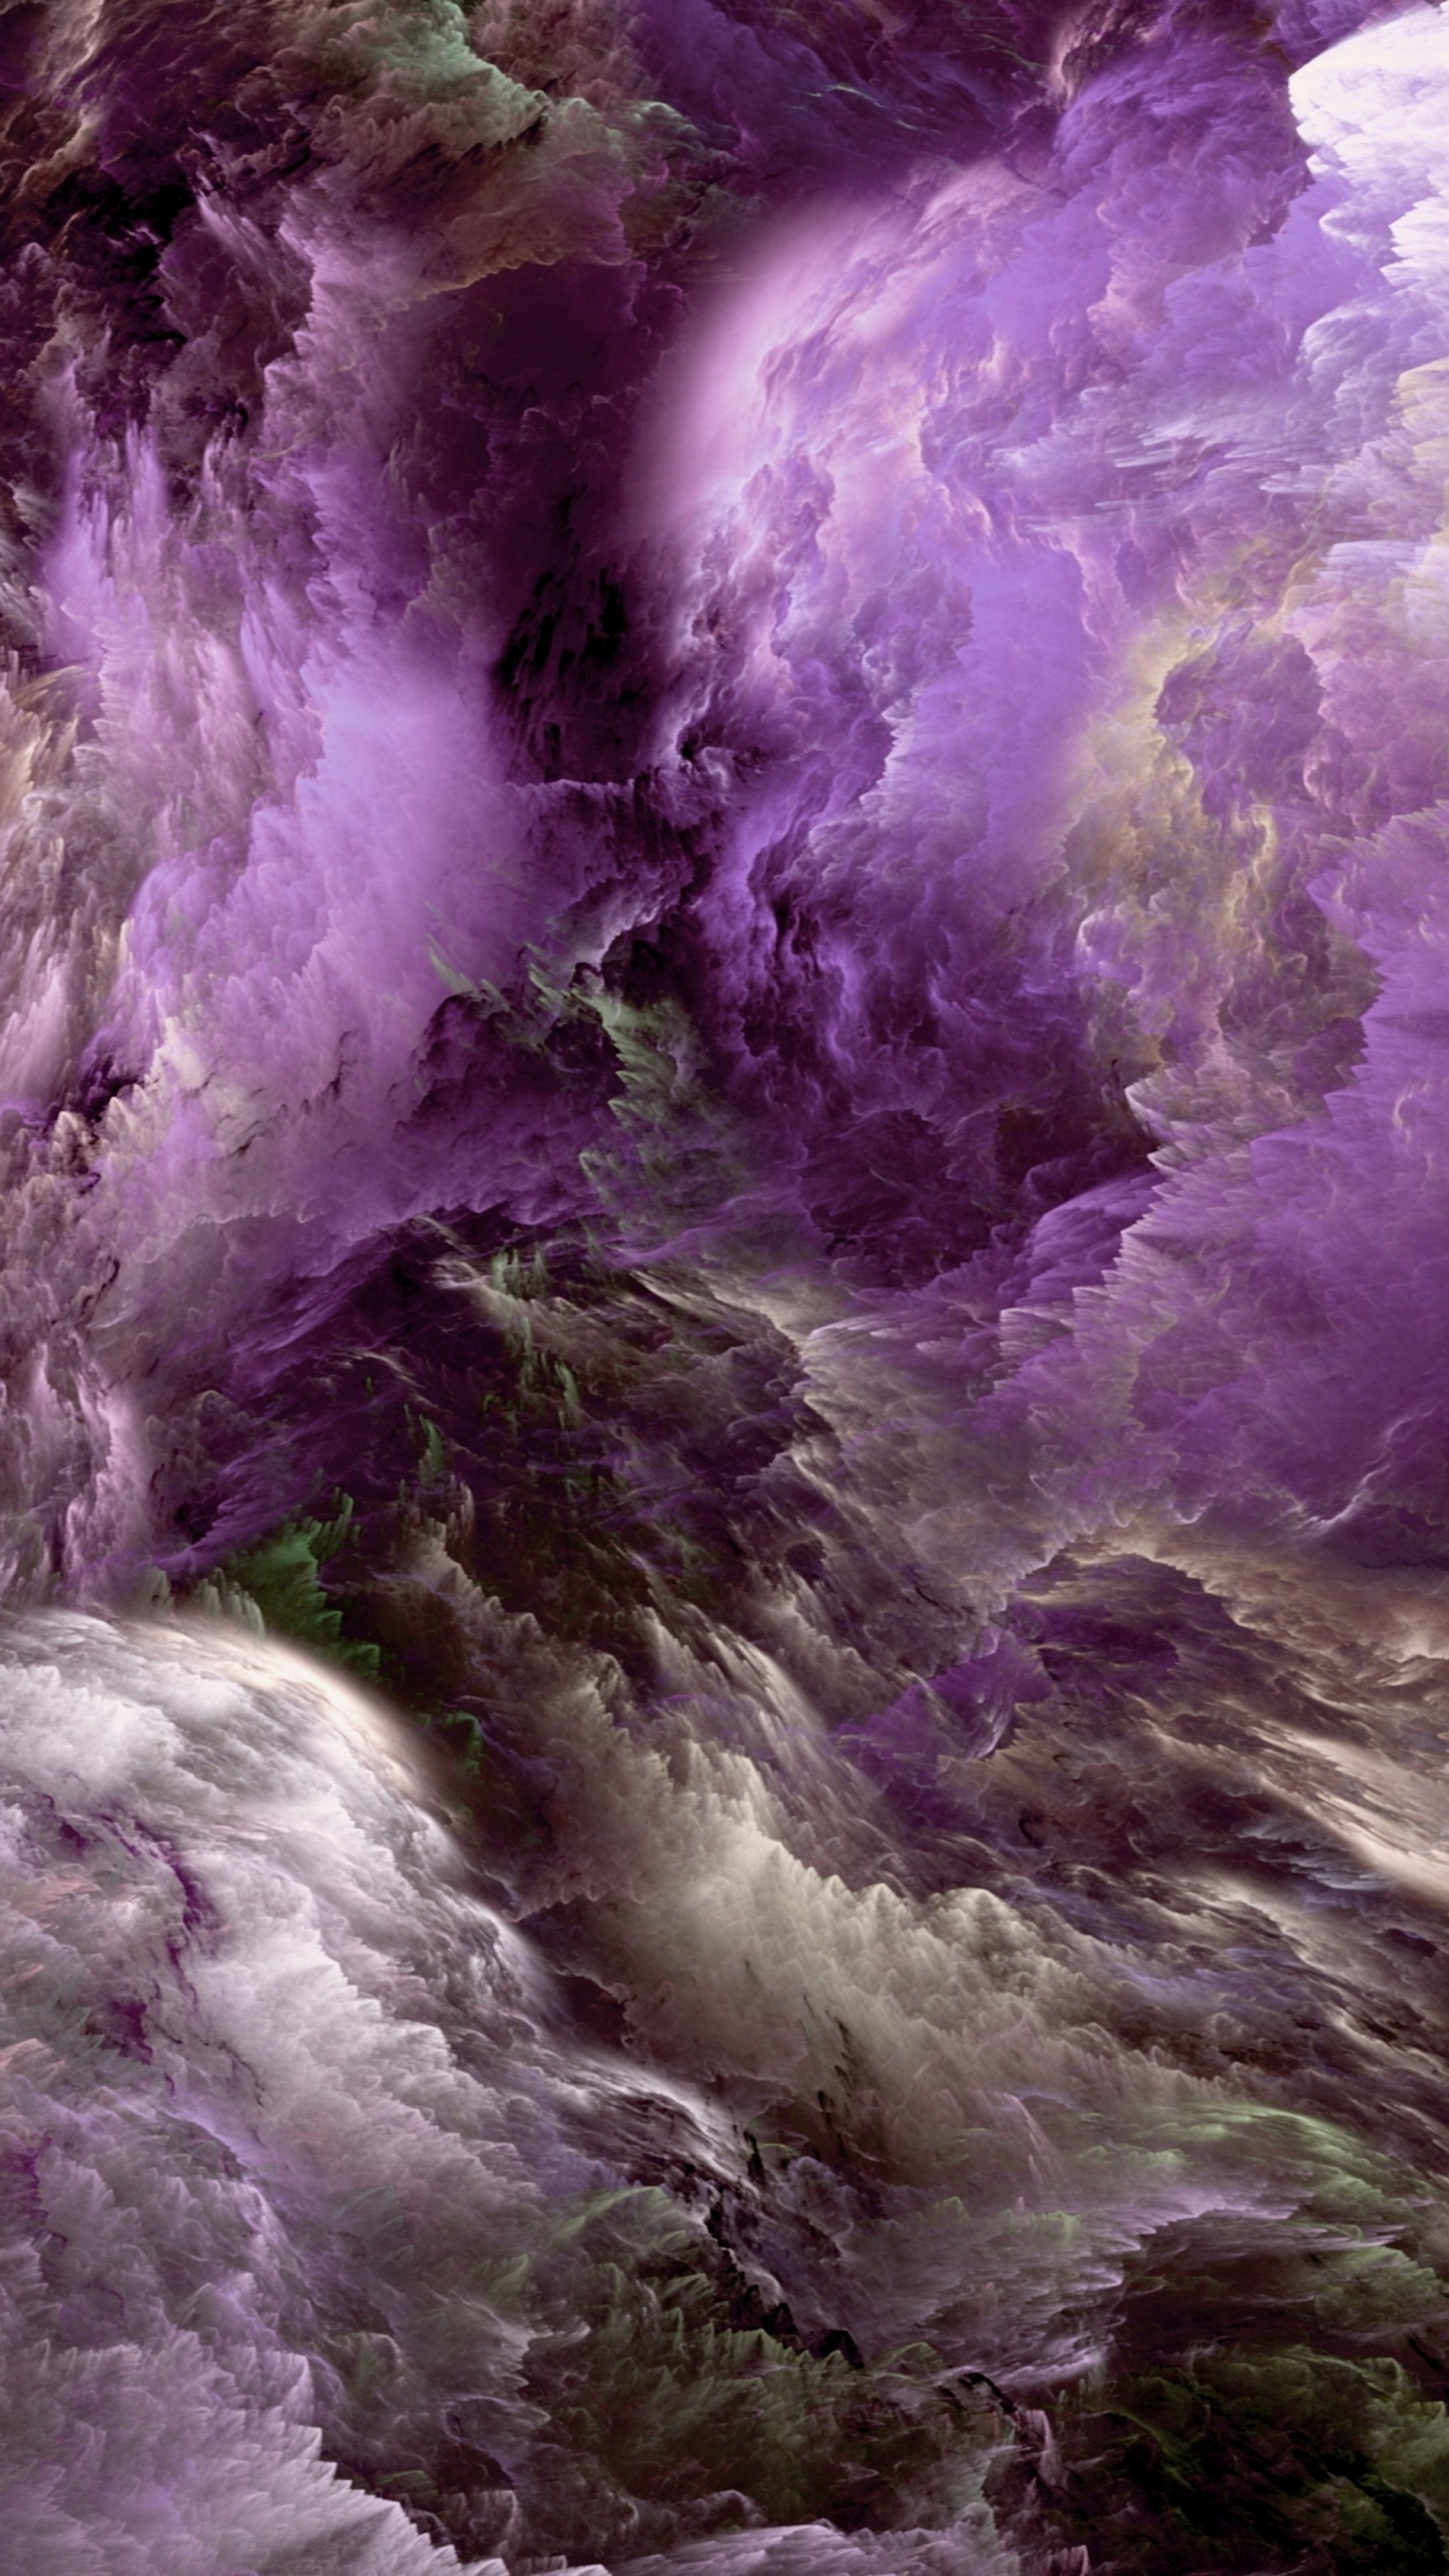 Wallpaper Clouds, 8k, 4k, 5k wallpaper, abstract, purple, live wallpaper, live photo, Nature